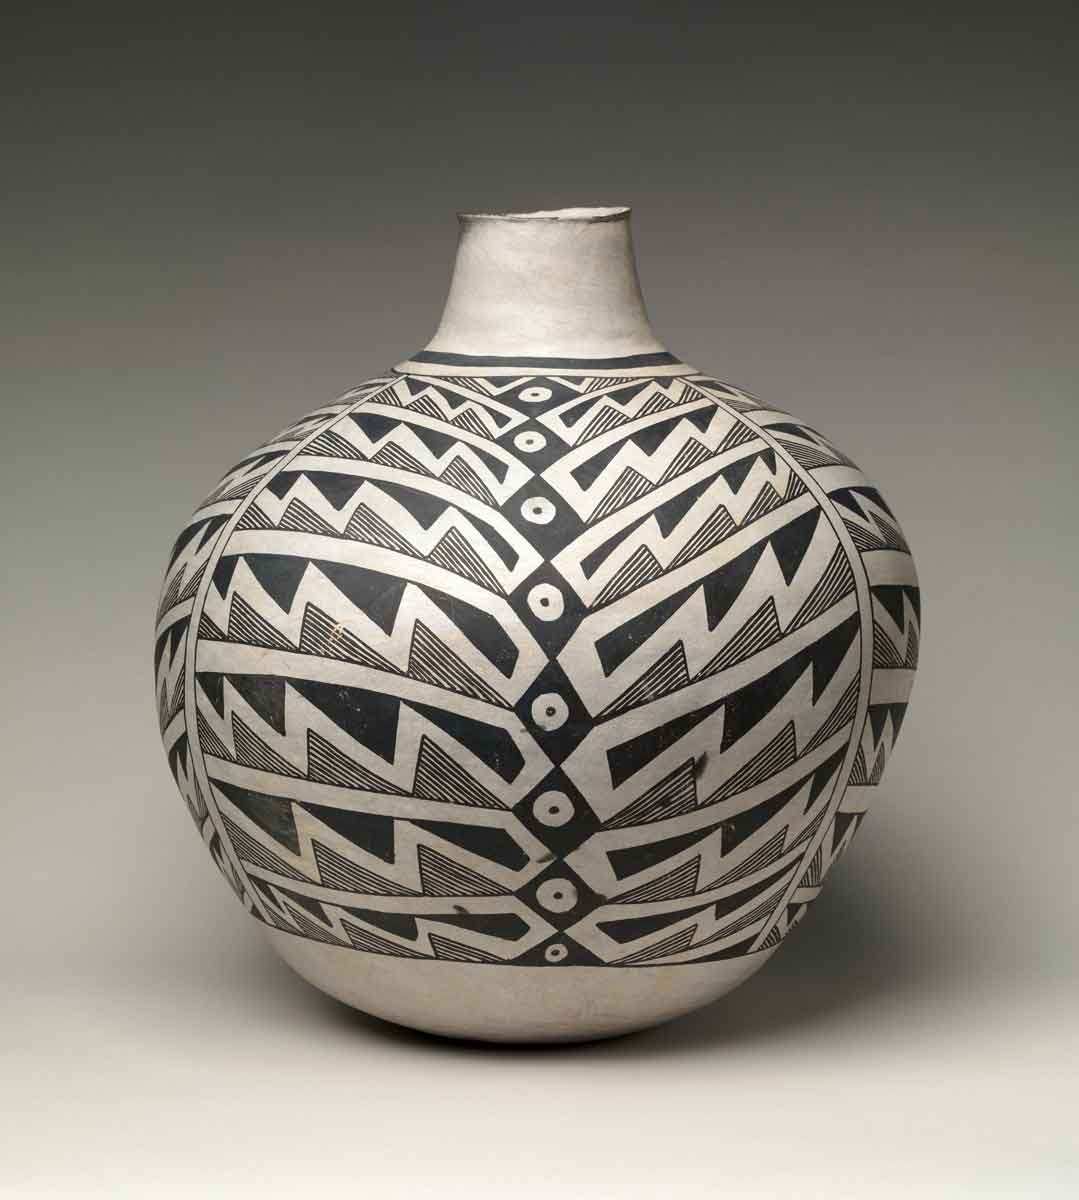 anasazi ceramic vase 950ce via met